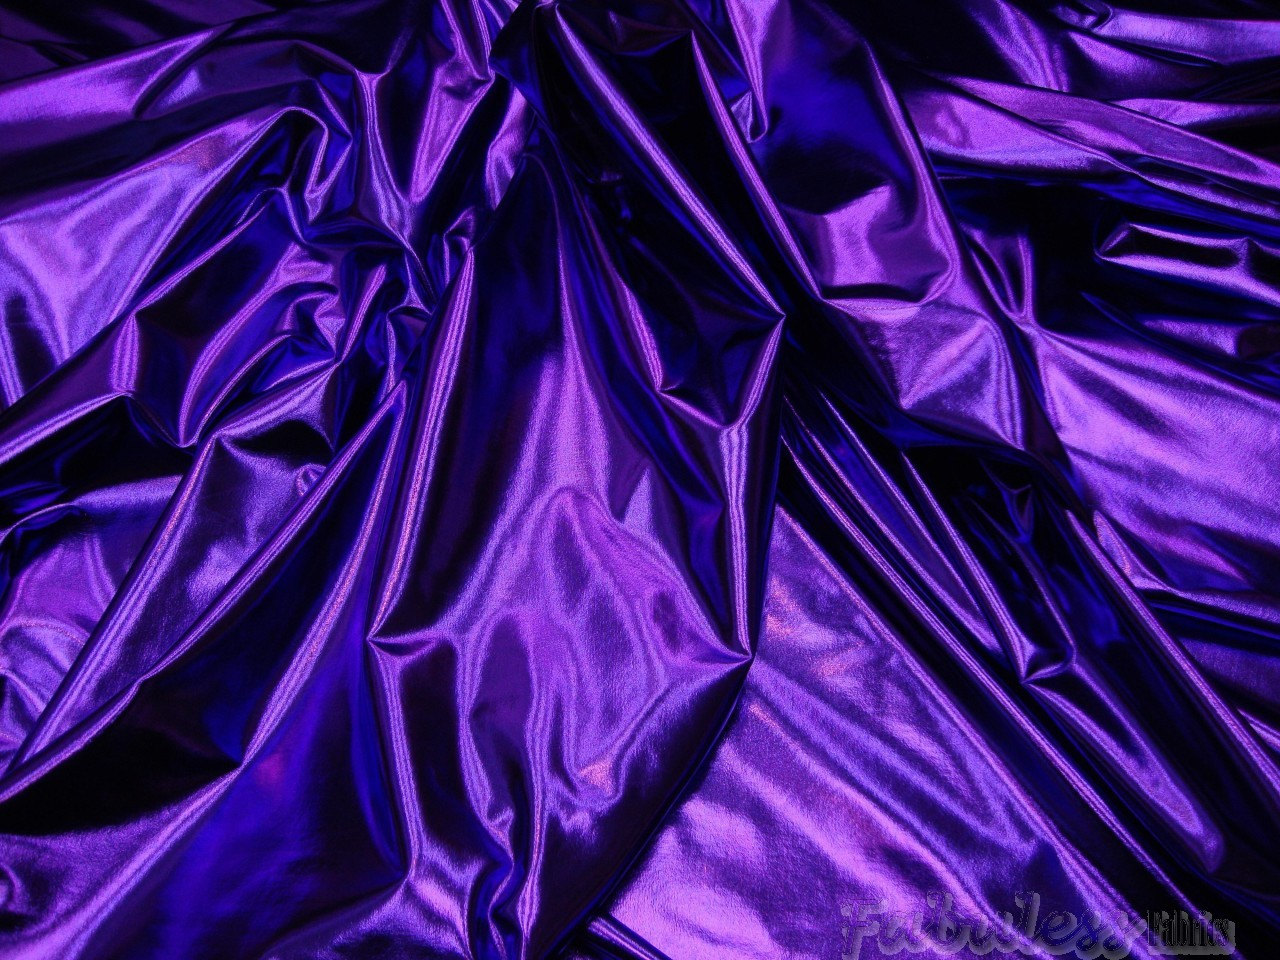 Purple Metallic Dress - Review 2017